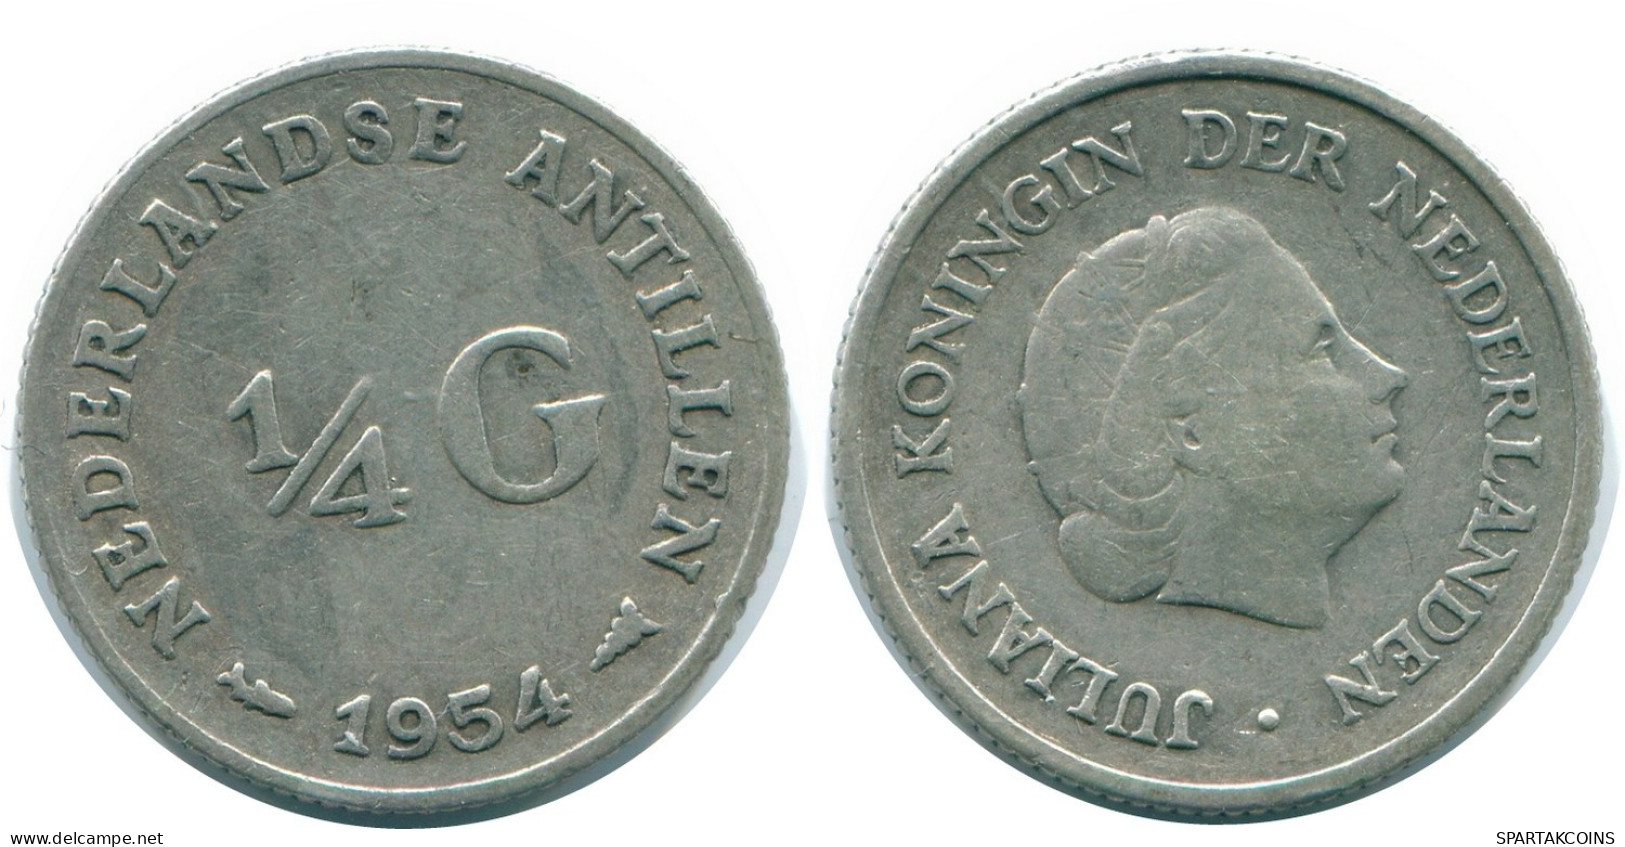 1/4 GULDEN 1954 NETHERLANDS ANTILLES SILVER Colonial Coin #NL10855.4.U.A - Niederländische Antillen